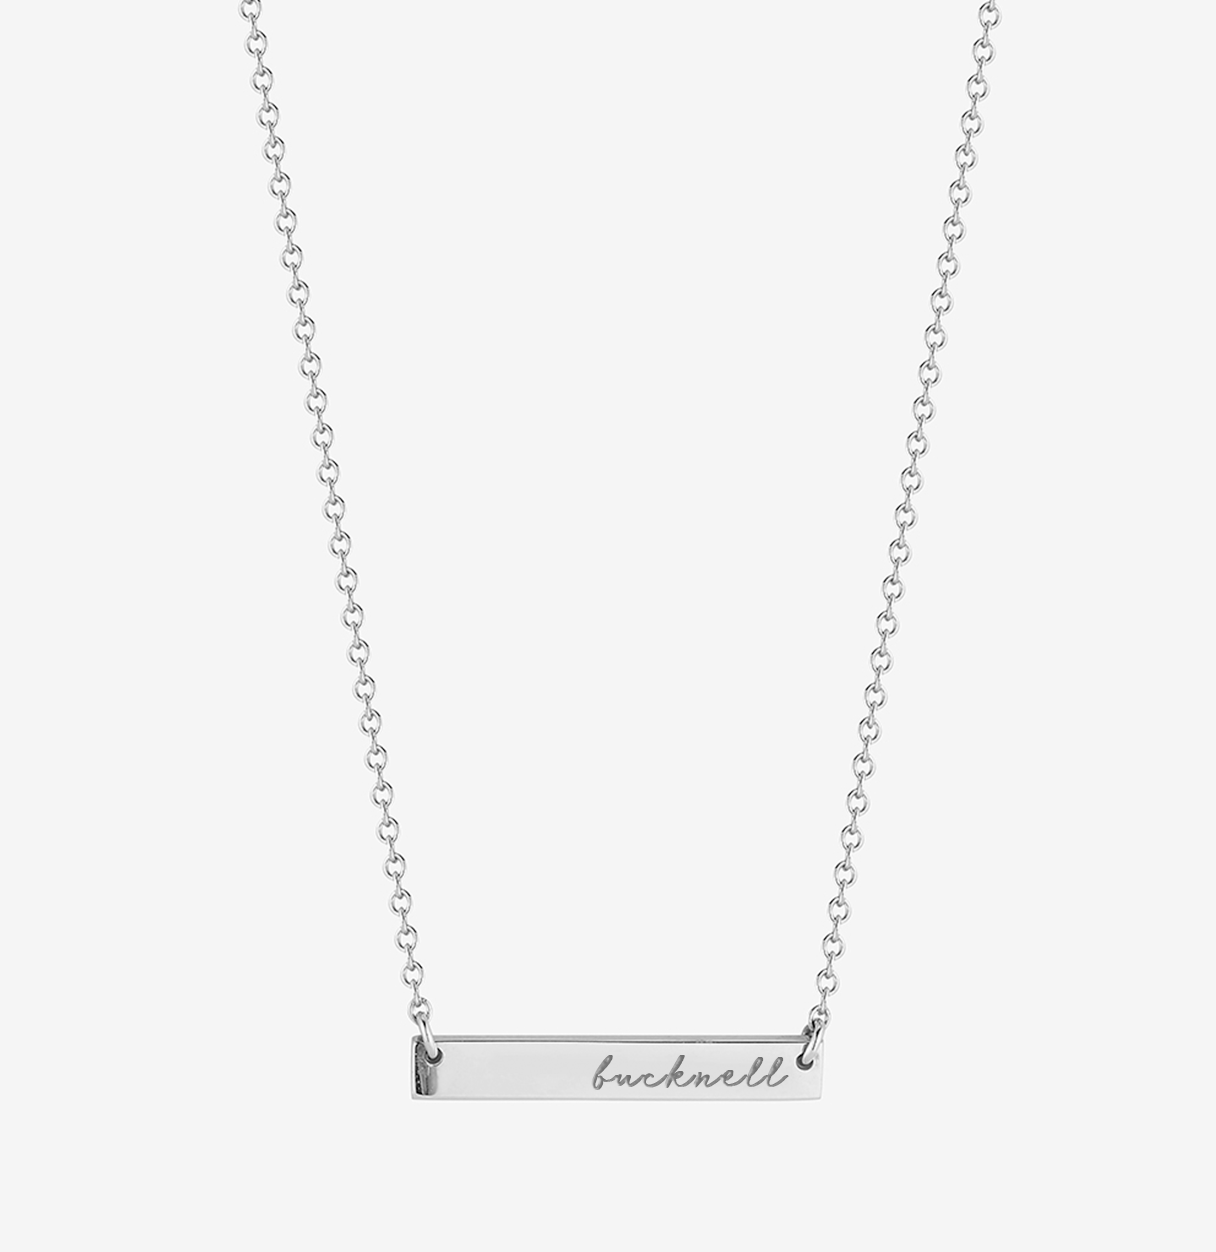 Bucknell Horizontal Bar Necklace